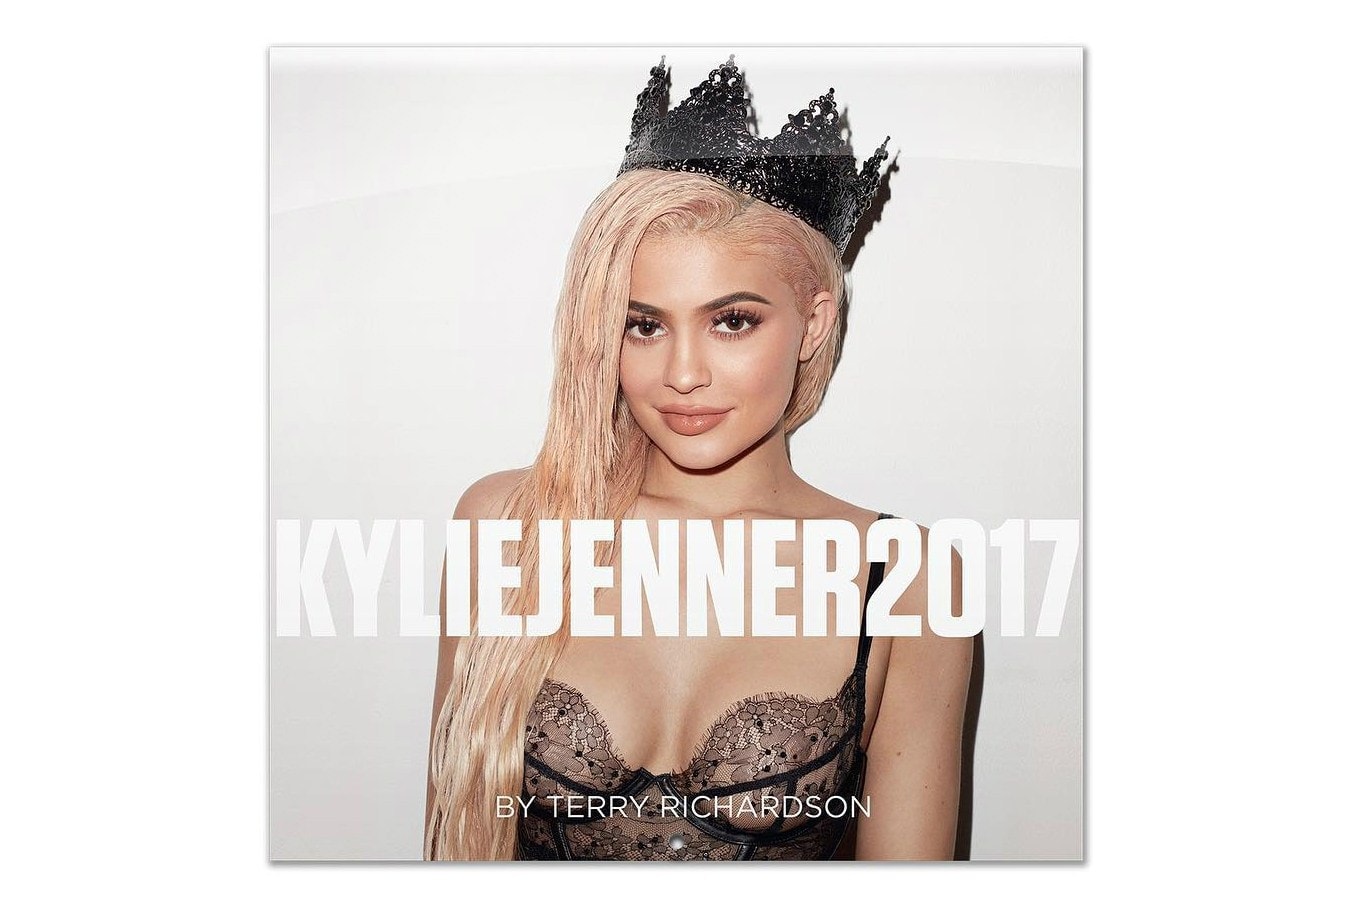 Kylie Jenner Gets Her Own 2017 Calendar Shot by Terry Richardson Photograph Kardashian Kendall